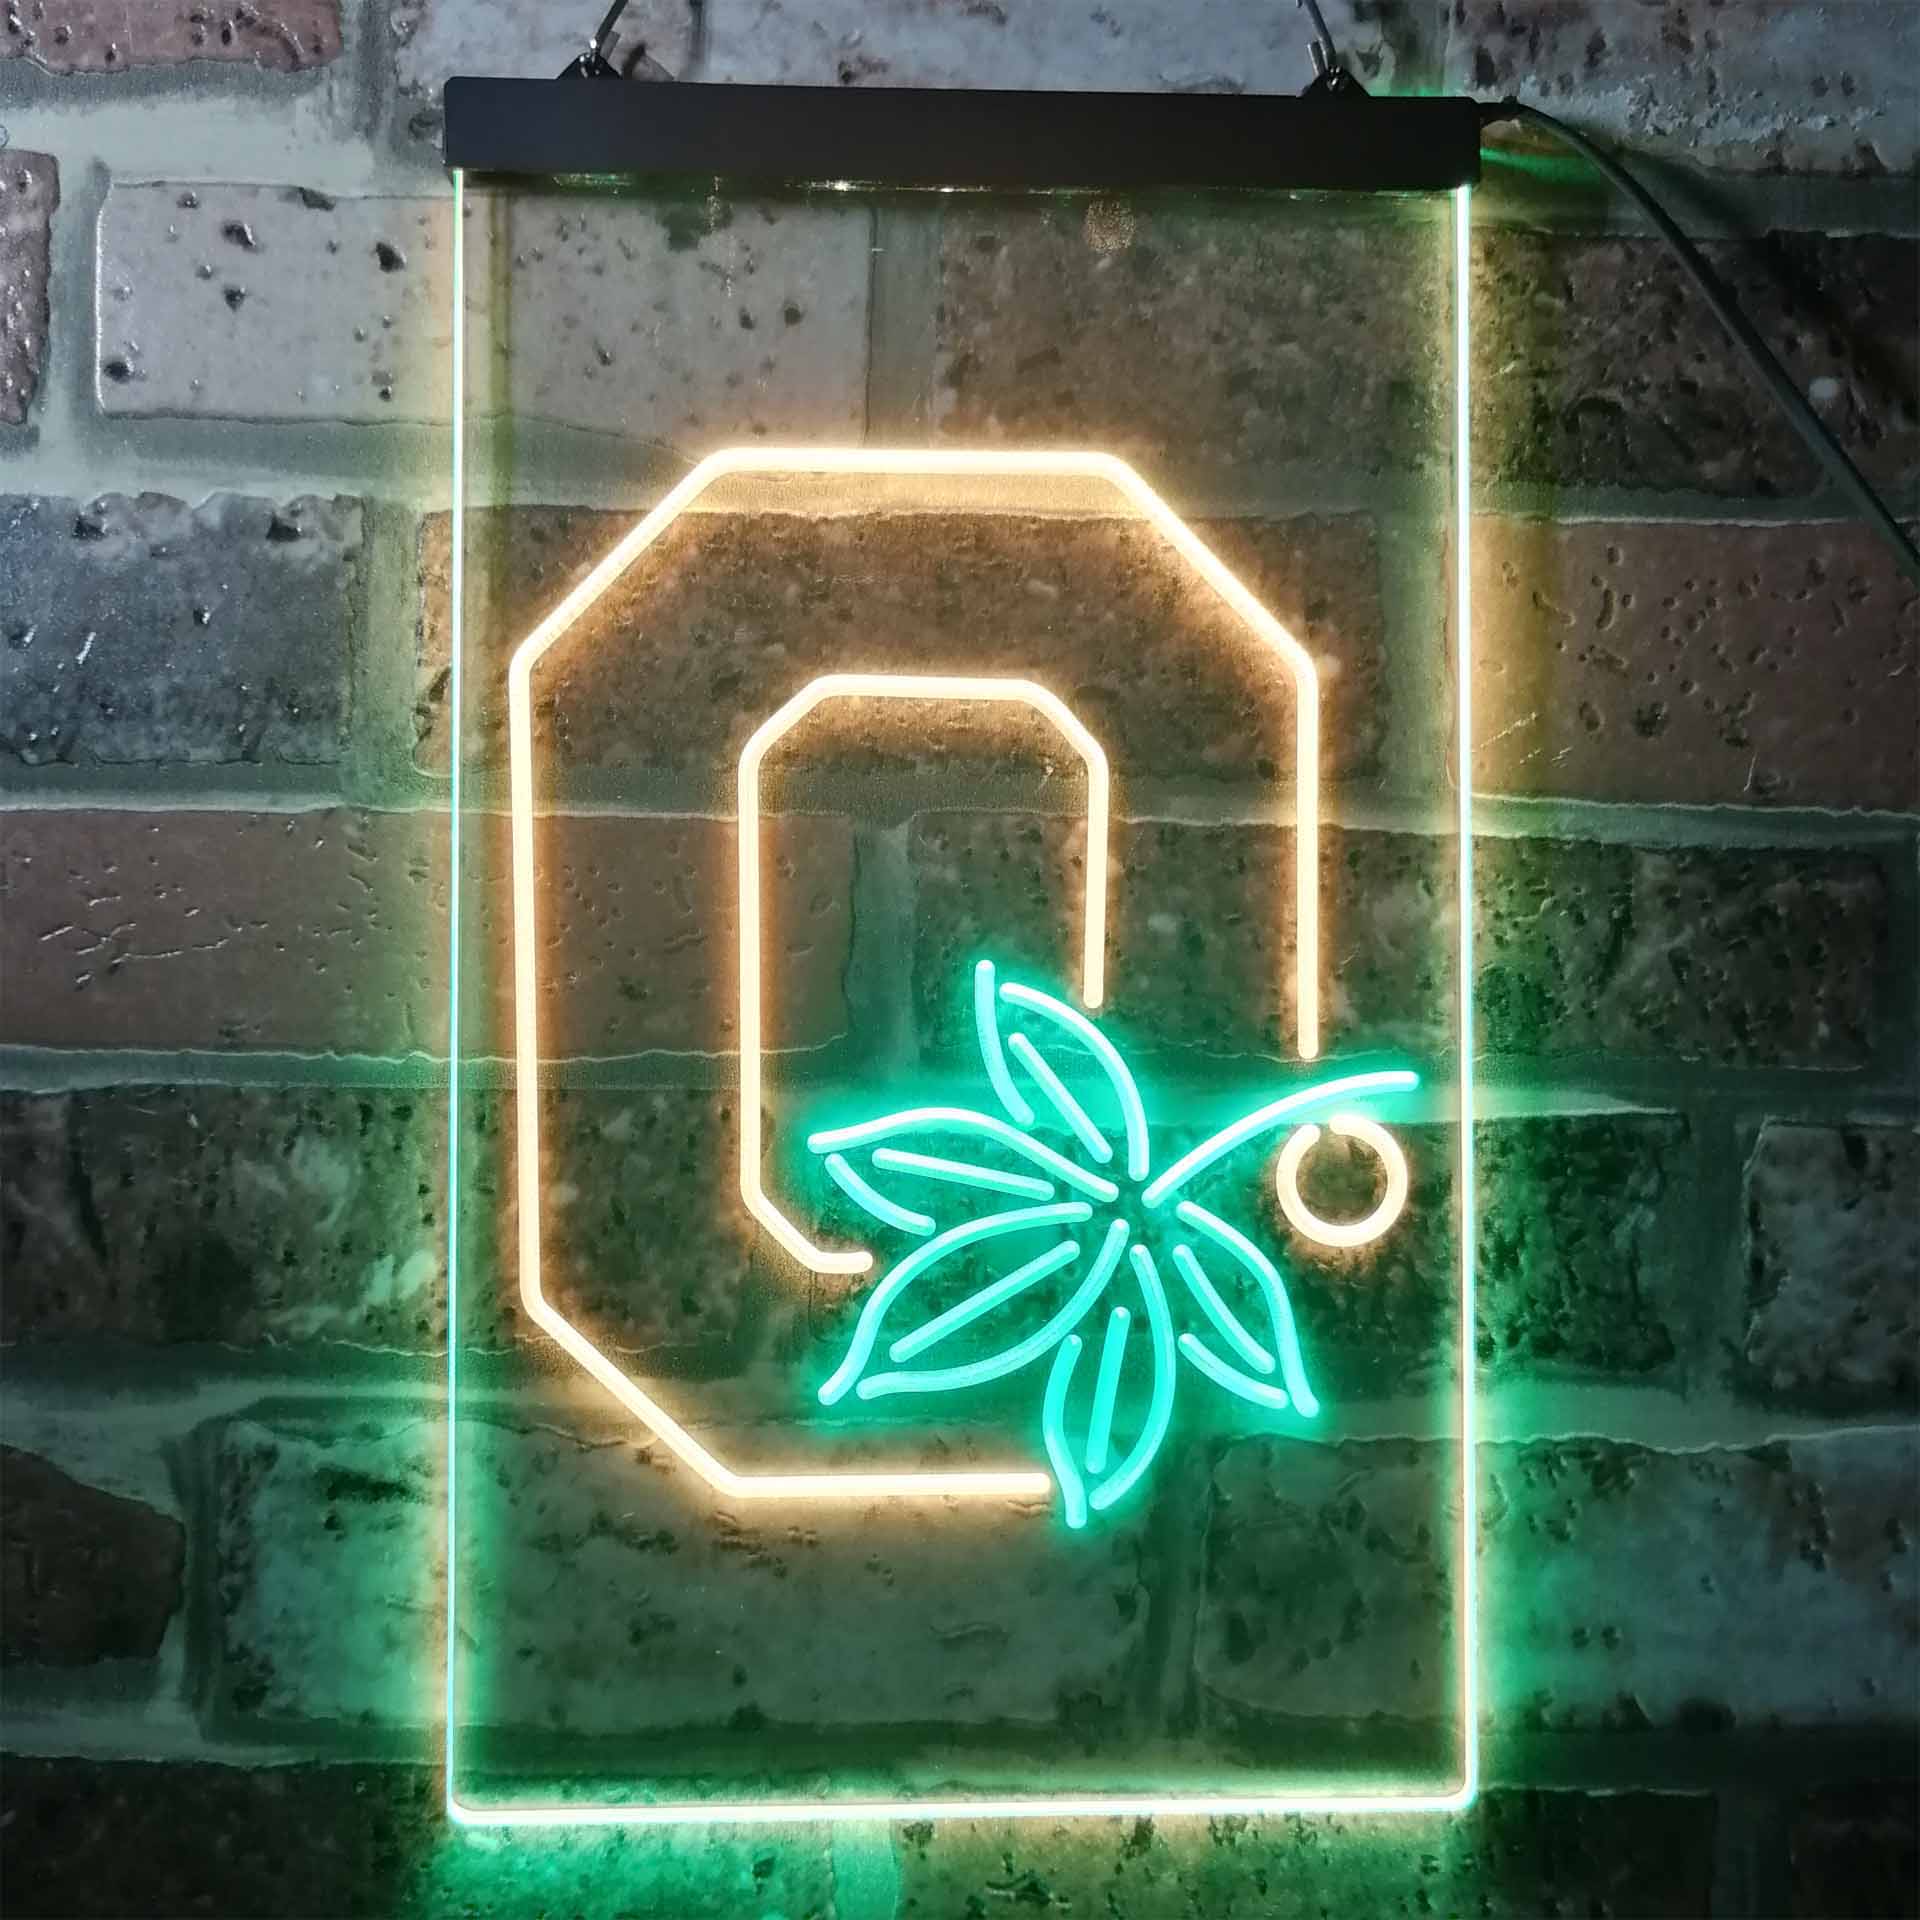 Ohio State Buckeyes Neon-Like LED Sign